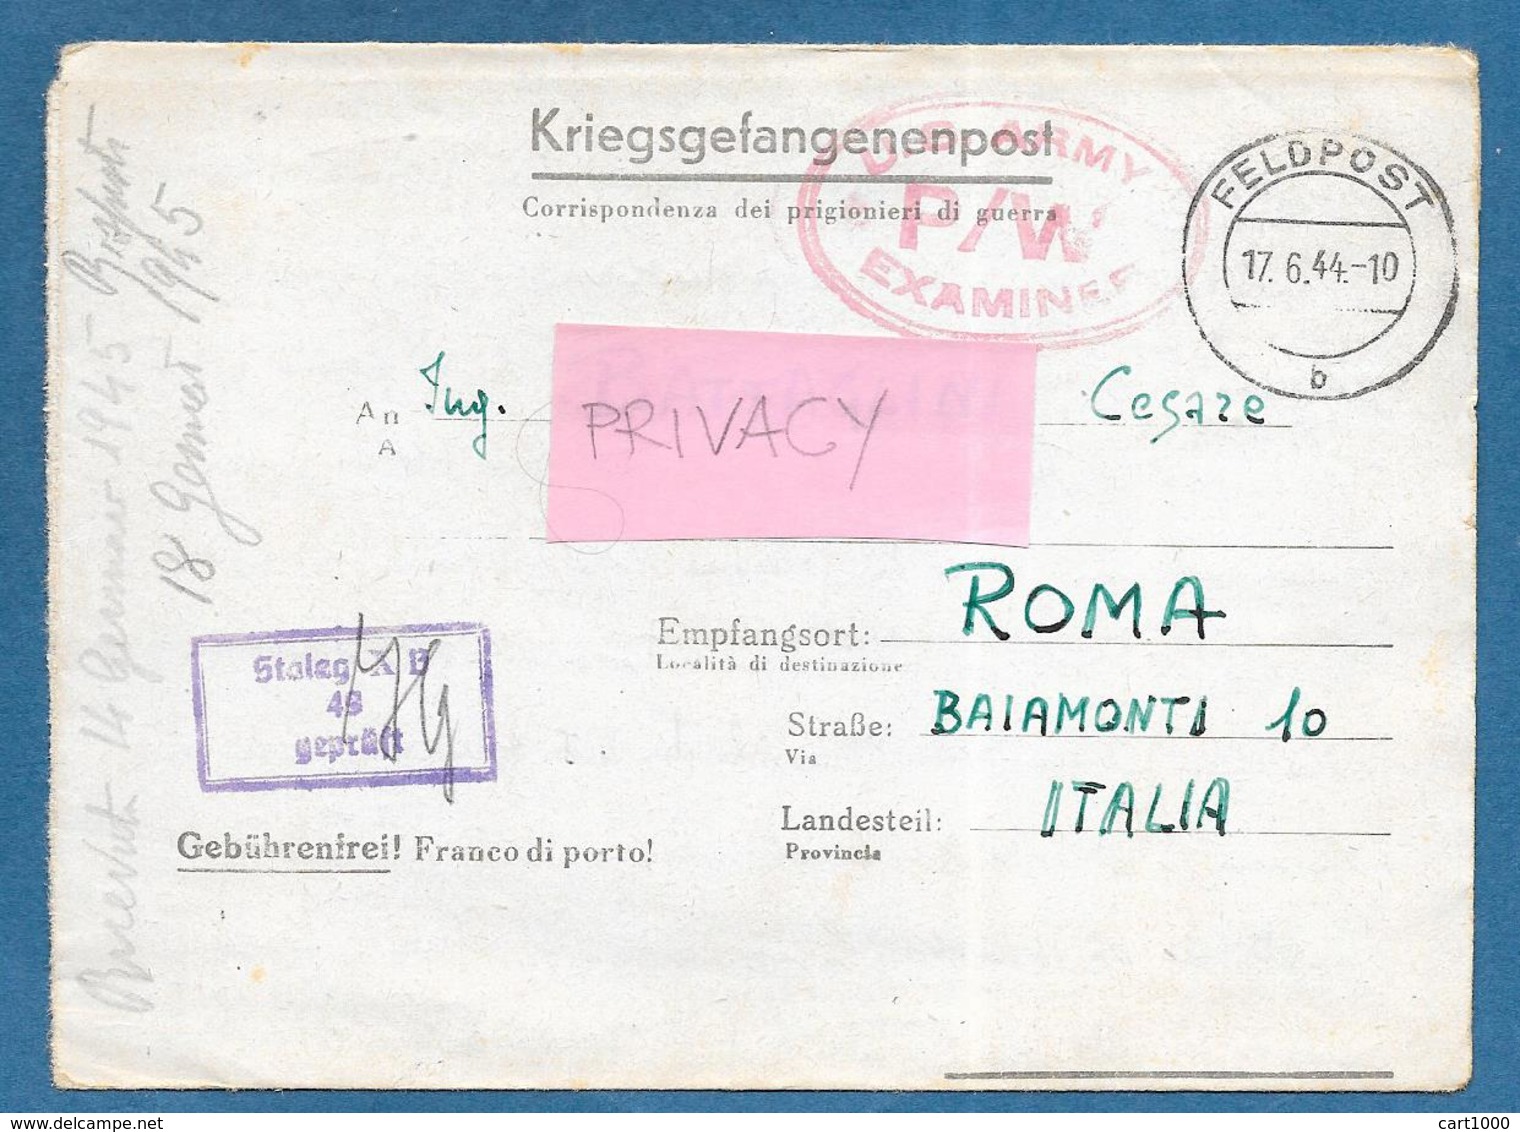 KRIEGSGEFANGENENPOST FELDPOST 1945 ROMA TO GERMANY M. STAMMLAGER X. B. PRISONNER OF WAR U.S. ARMY P/W EXAMINER - Documents